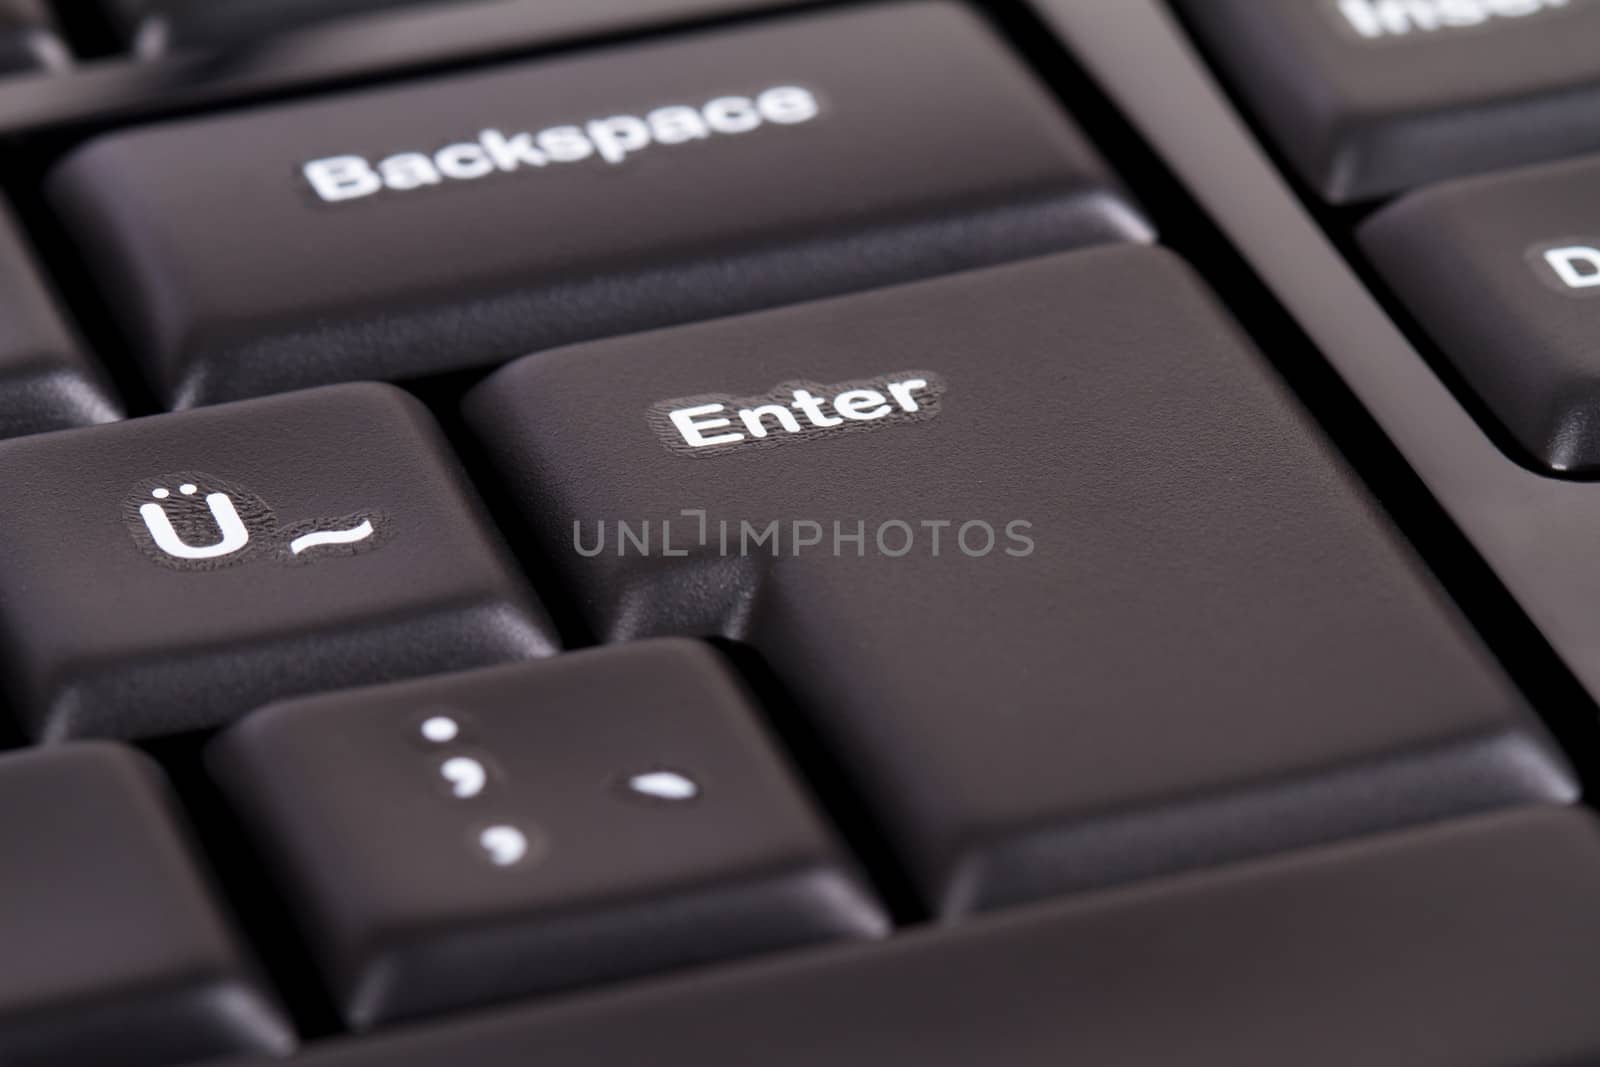 Enter key on black computer keyboard.